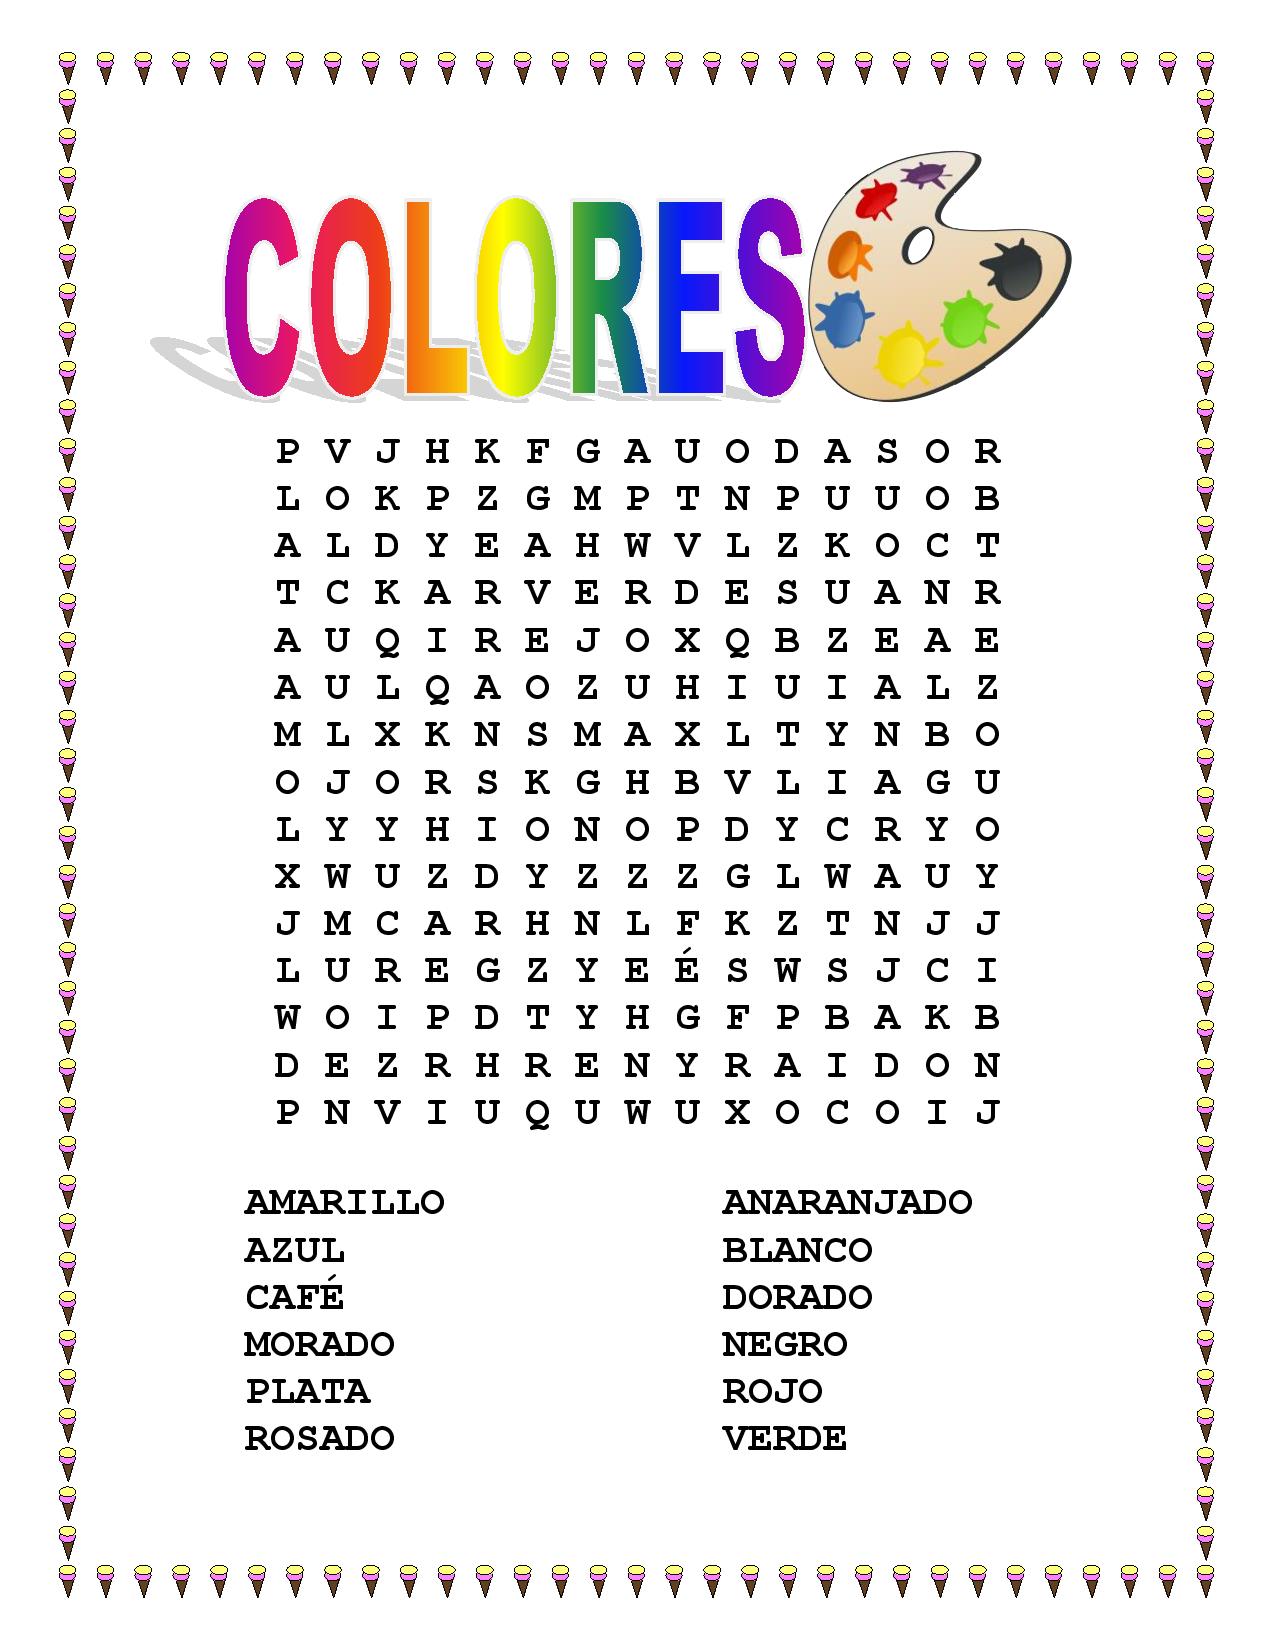 MISCELLANEOUS LESSONSPANISH COLORS Vocabulary & Word Search Colorea